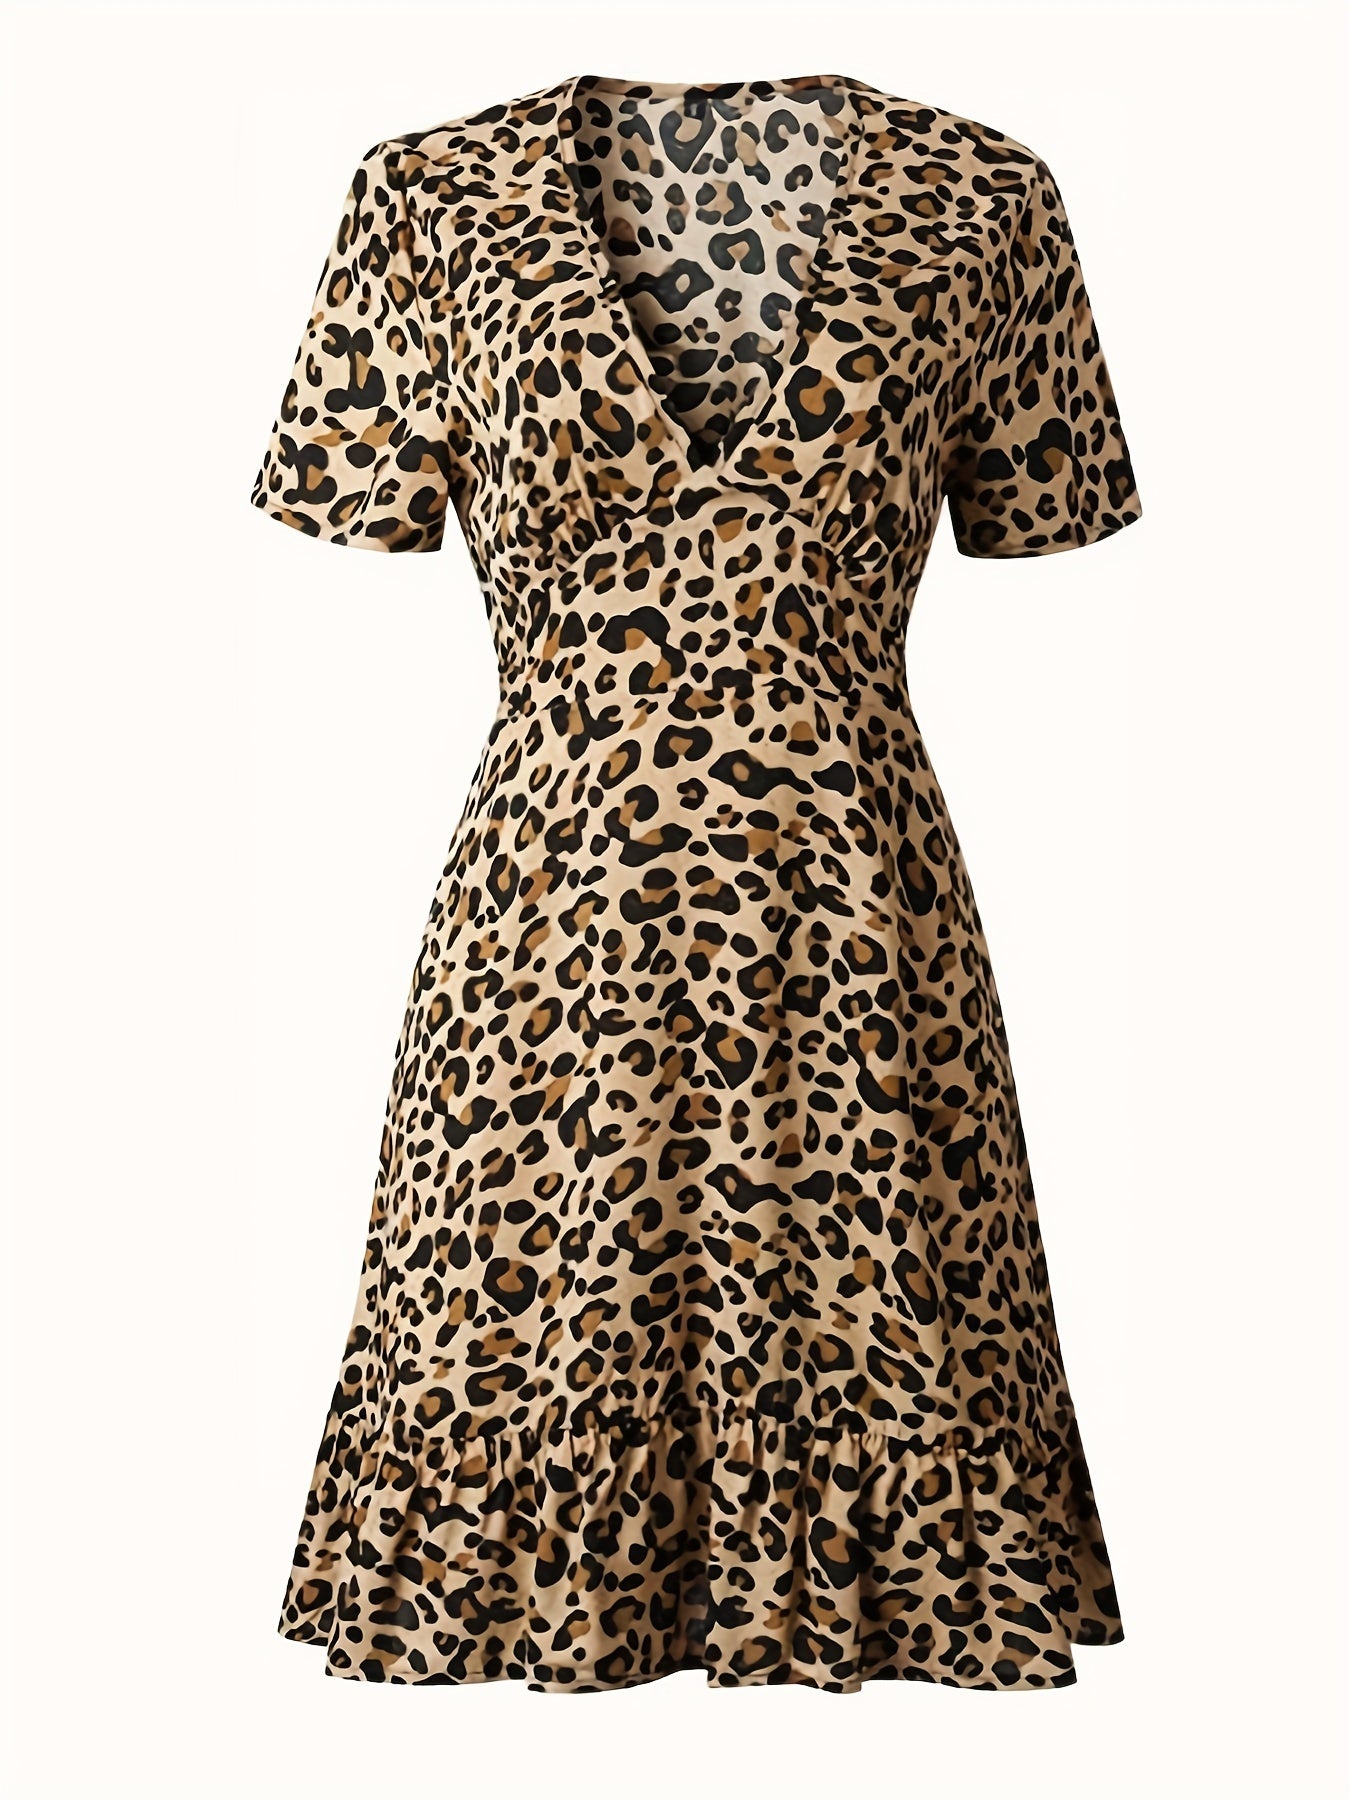 「lovevop」Leopard Print Ruffle Hem Dress, Sexy V Neck Short Sleeve Dress, Women's Clothing